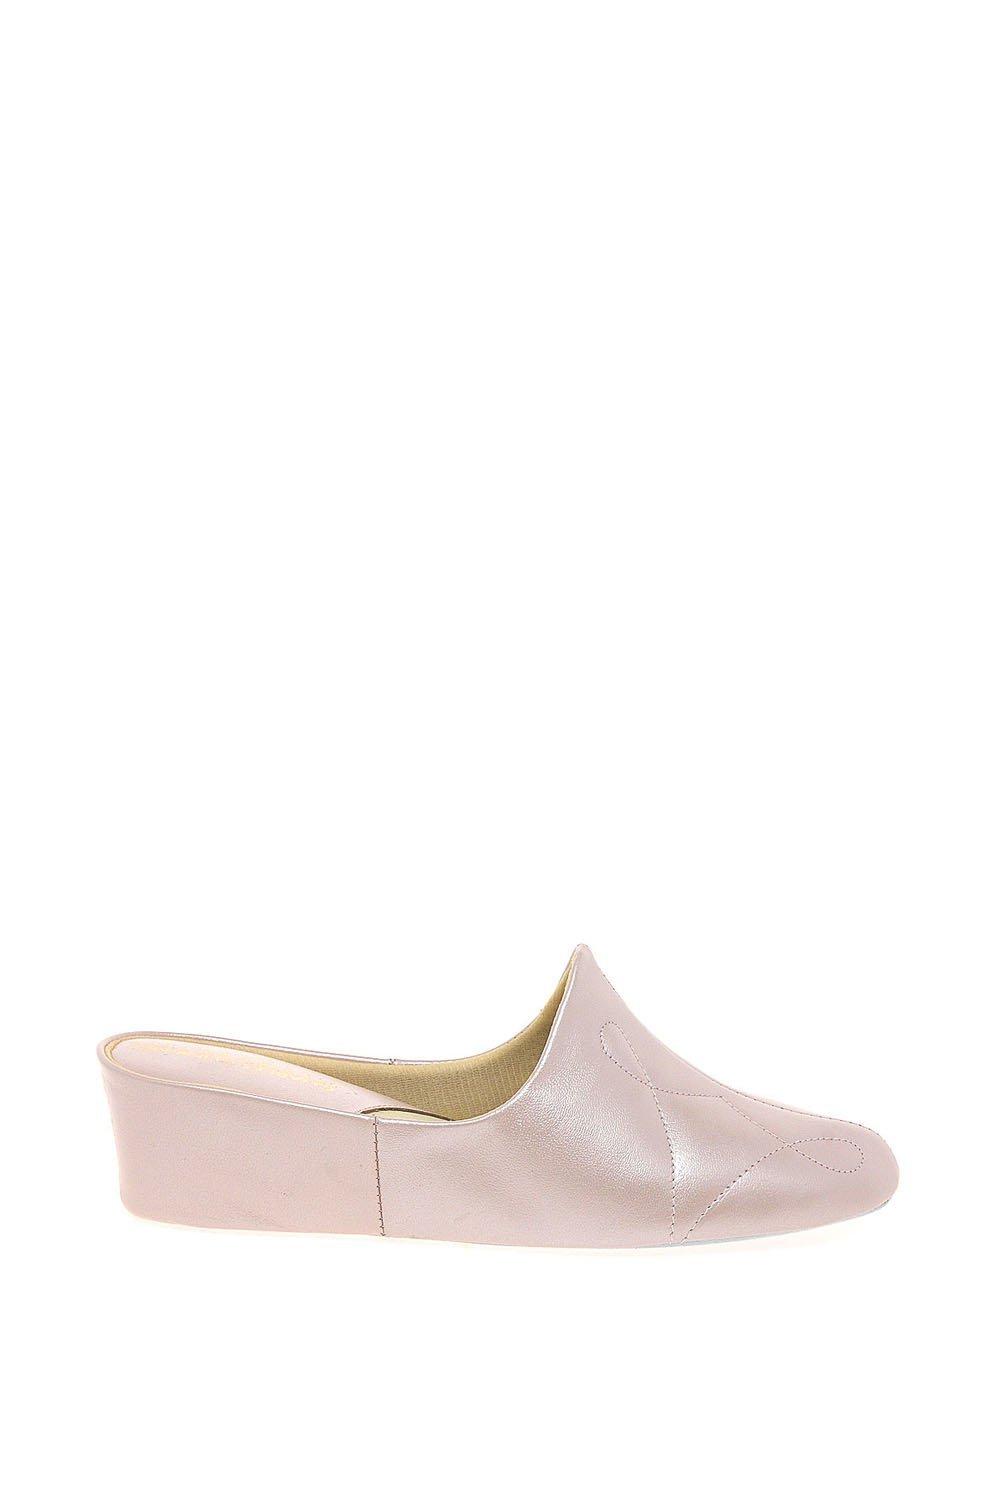 Charles Clinkard Women's 'Dulcie II' Leather Slippers|Size: 4|pale pink